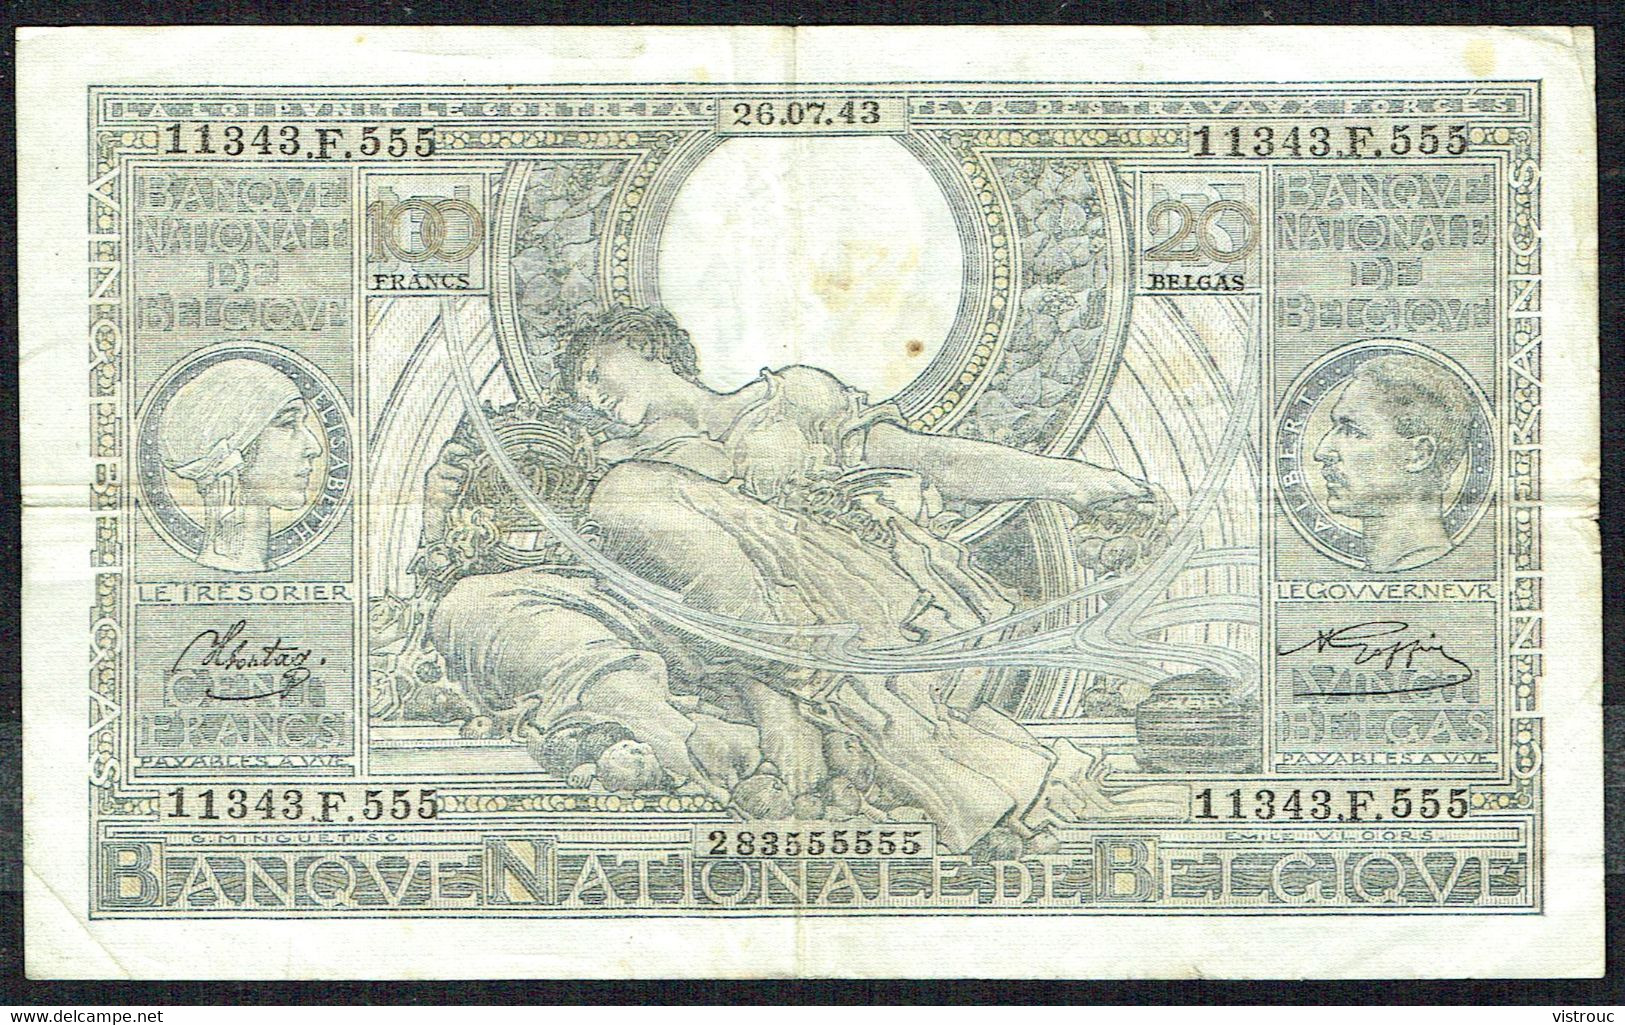 BELGIQUE - 100 Francs / 20 BELGAS - 26/07/1943 - N° 11343.F.555 - 100 Francs & 100 Francs-20 Belgas